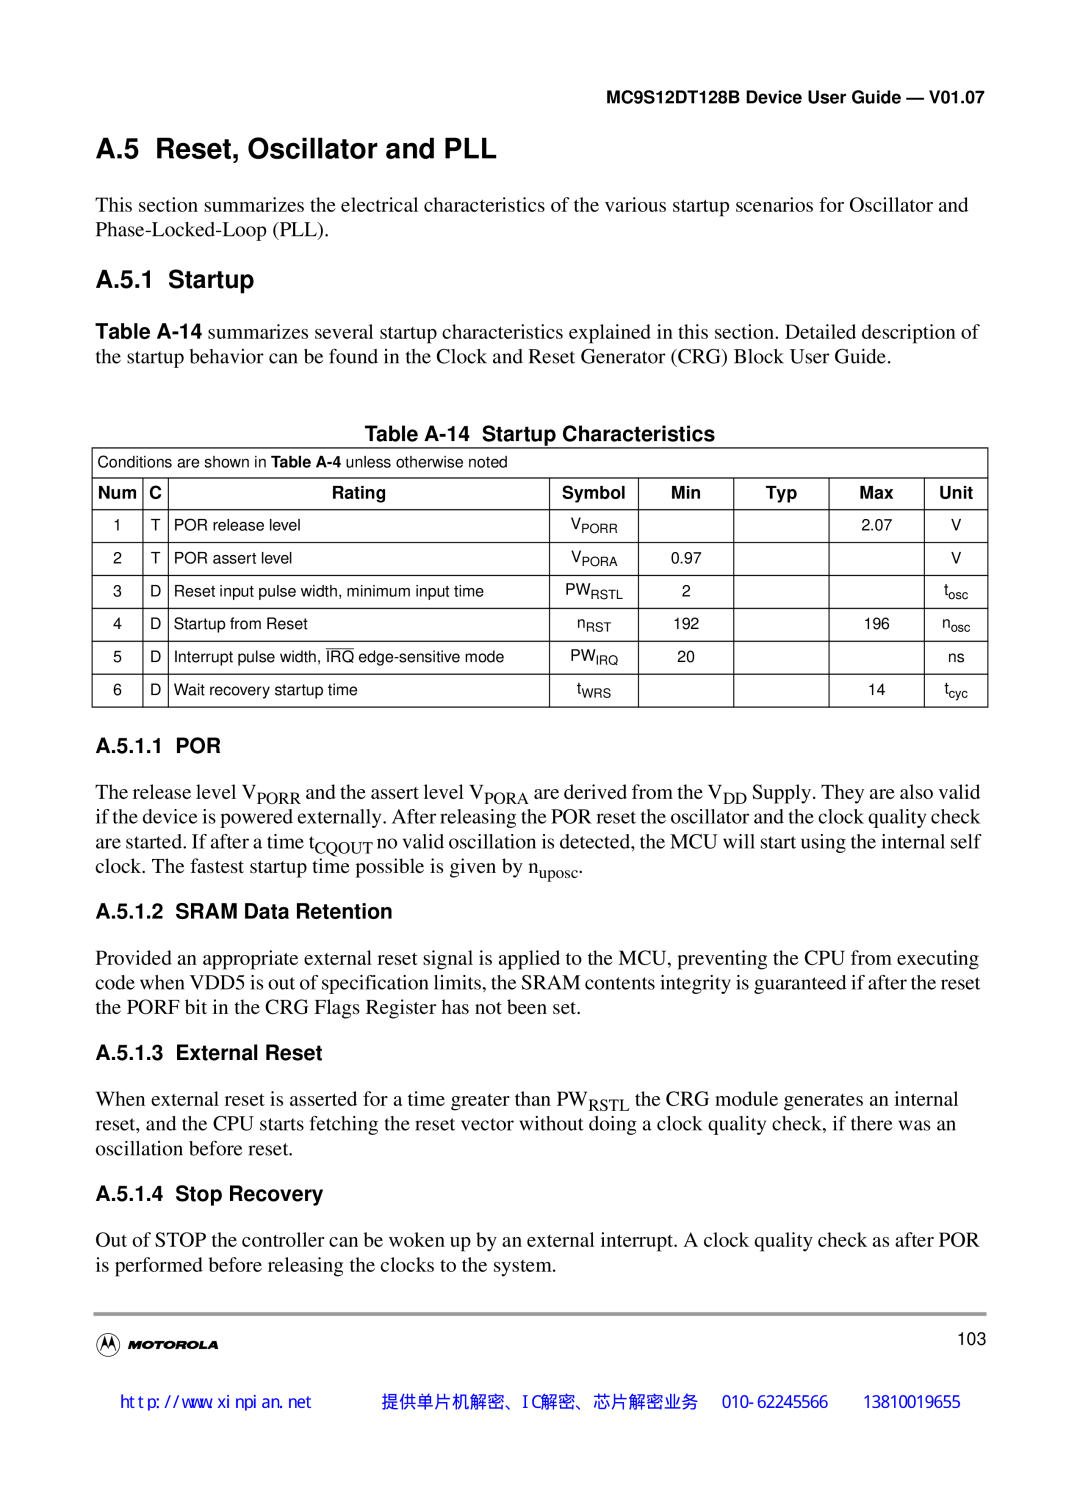 Motorola MC9S12DG128B manual A.5 Reset, Oscillator and PLL, A.5.1 Startup, Table A-14 Startup Characteristics, A.5.1.1 POR 